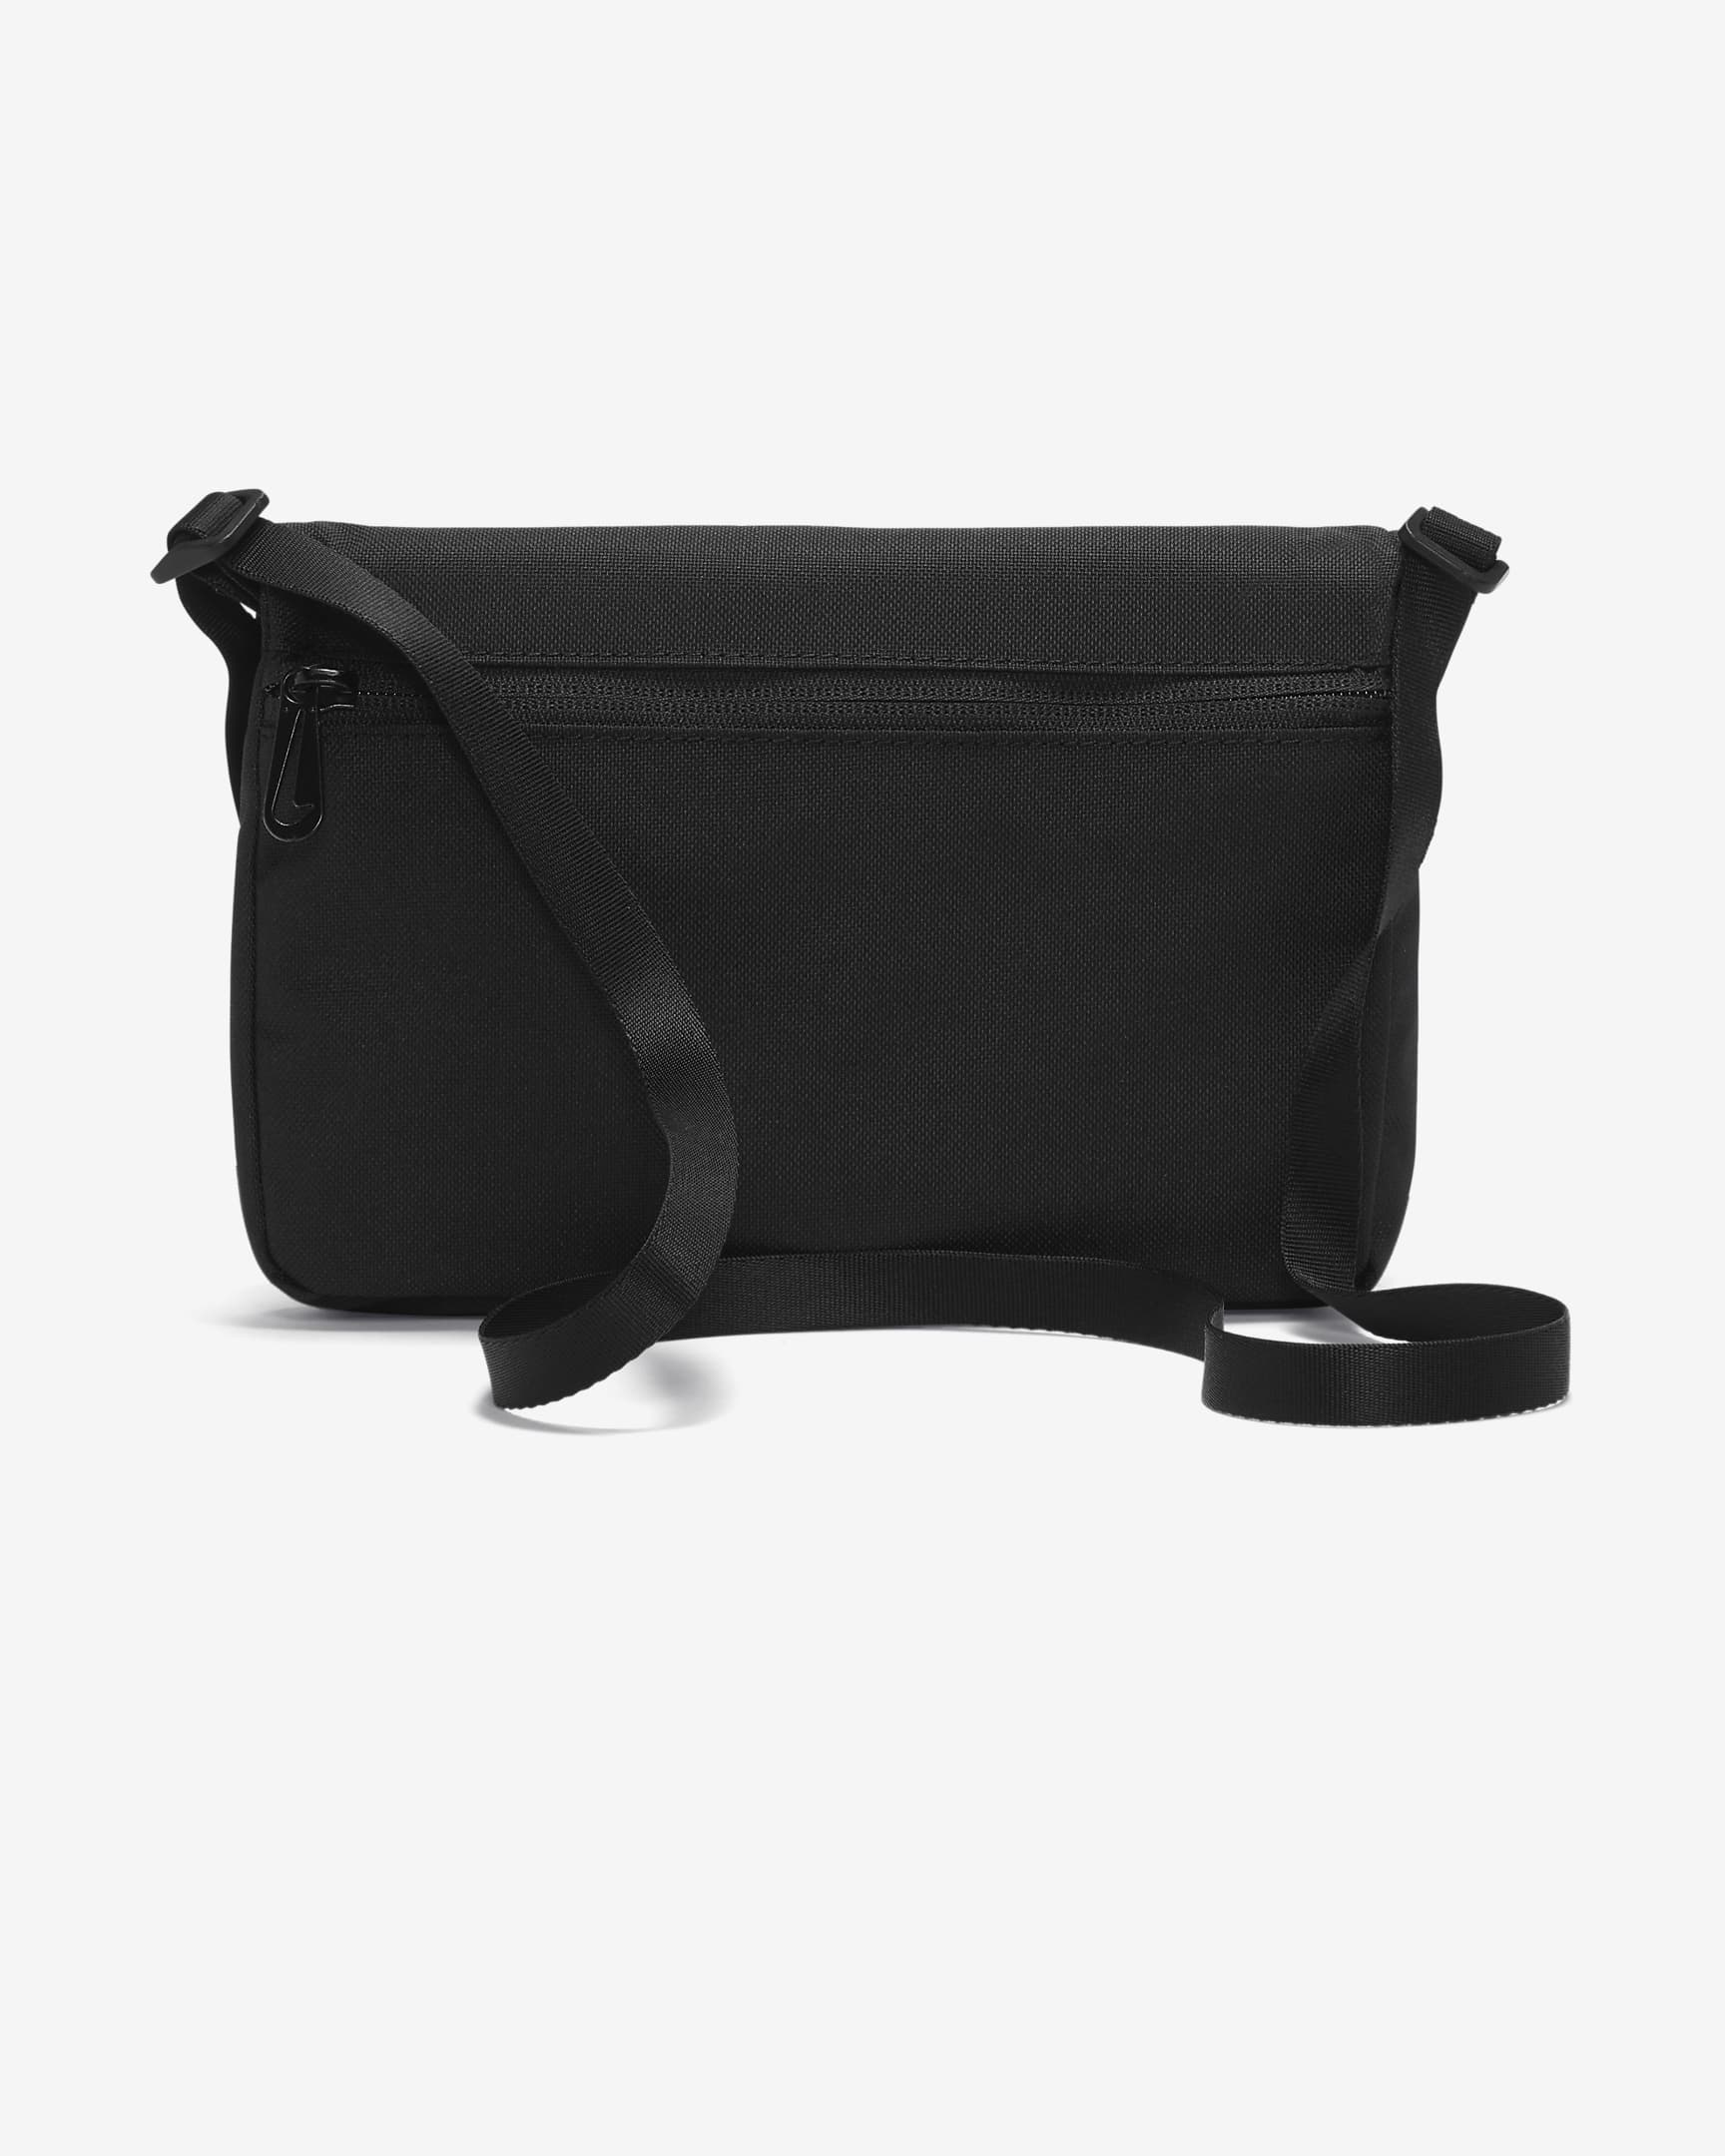 Nike Sportswear Women's Futura 365 Cross-body Bag (3L) - Black/Black/White